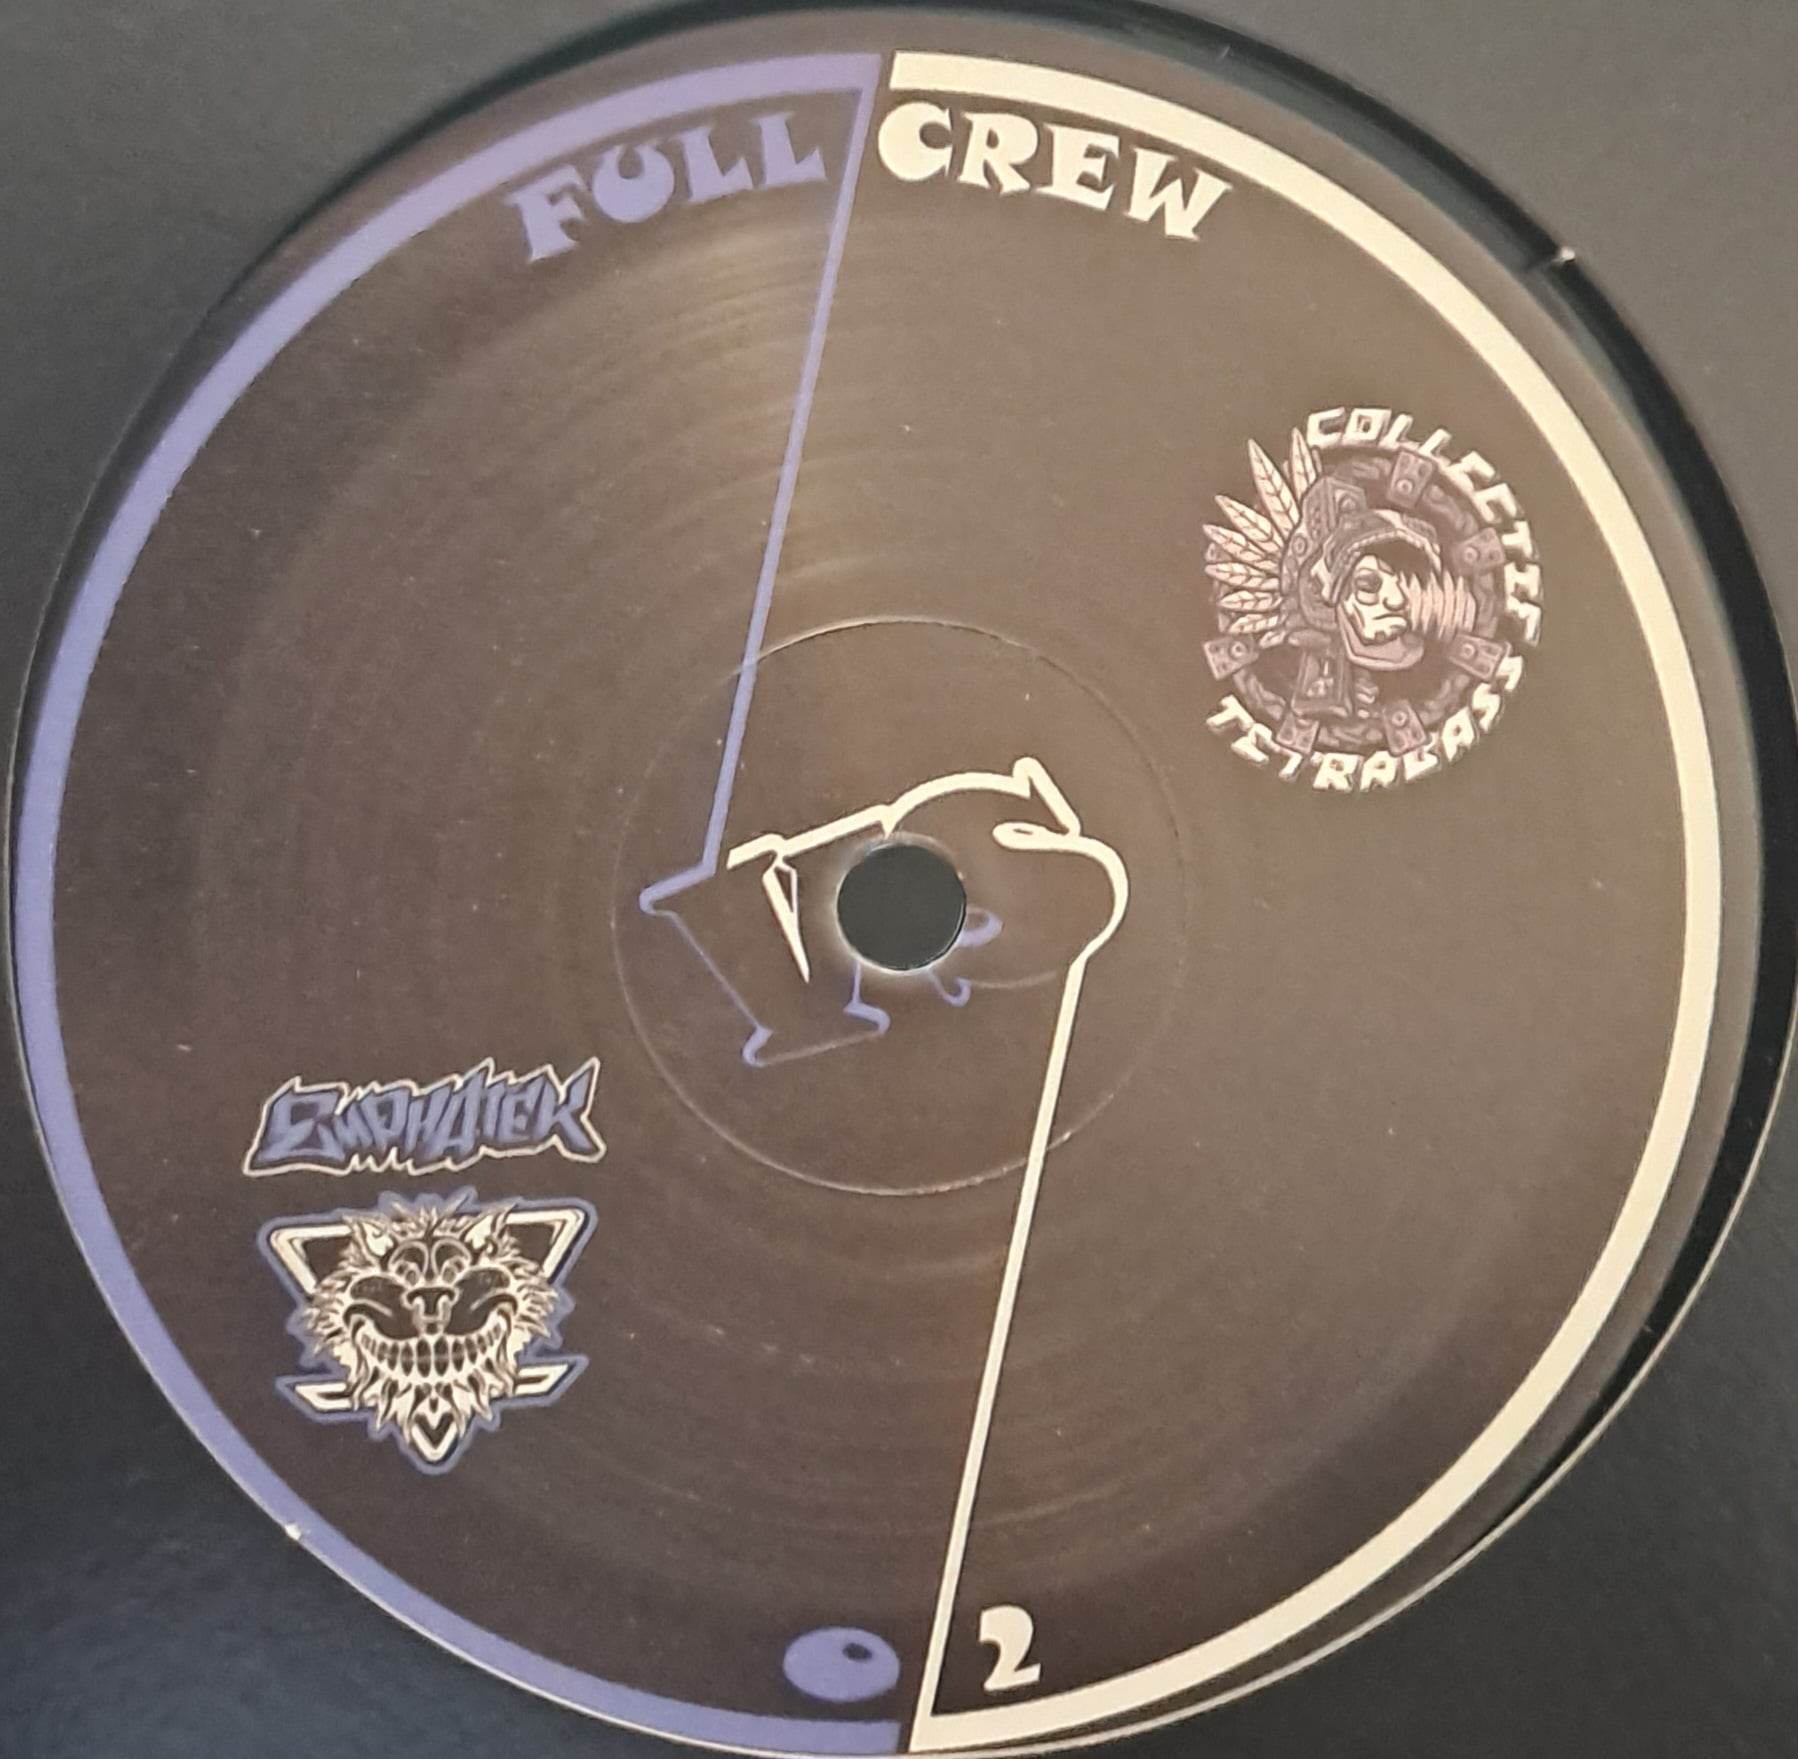 Full Crew 02 (dernières copies en stock) - vinyle frenchcore